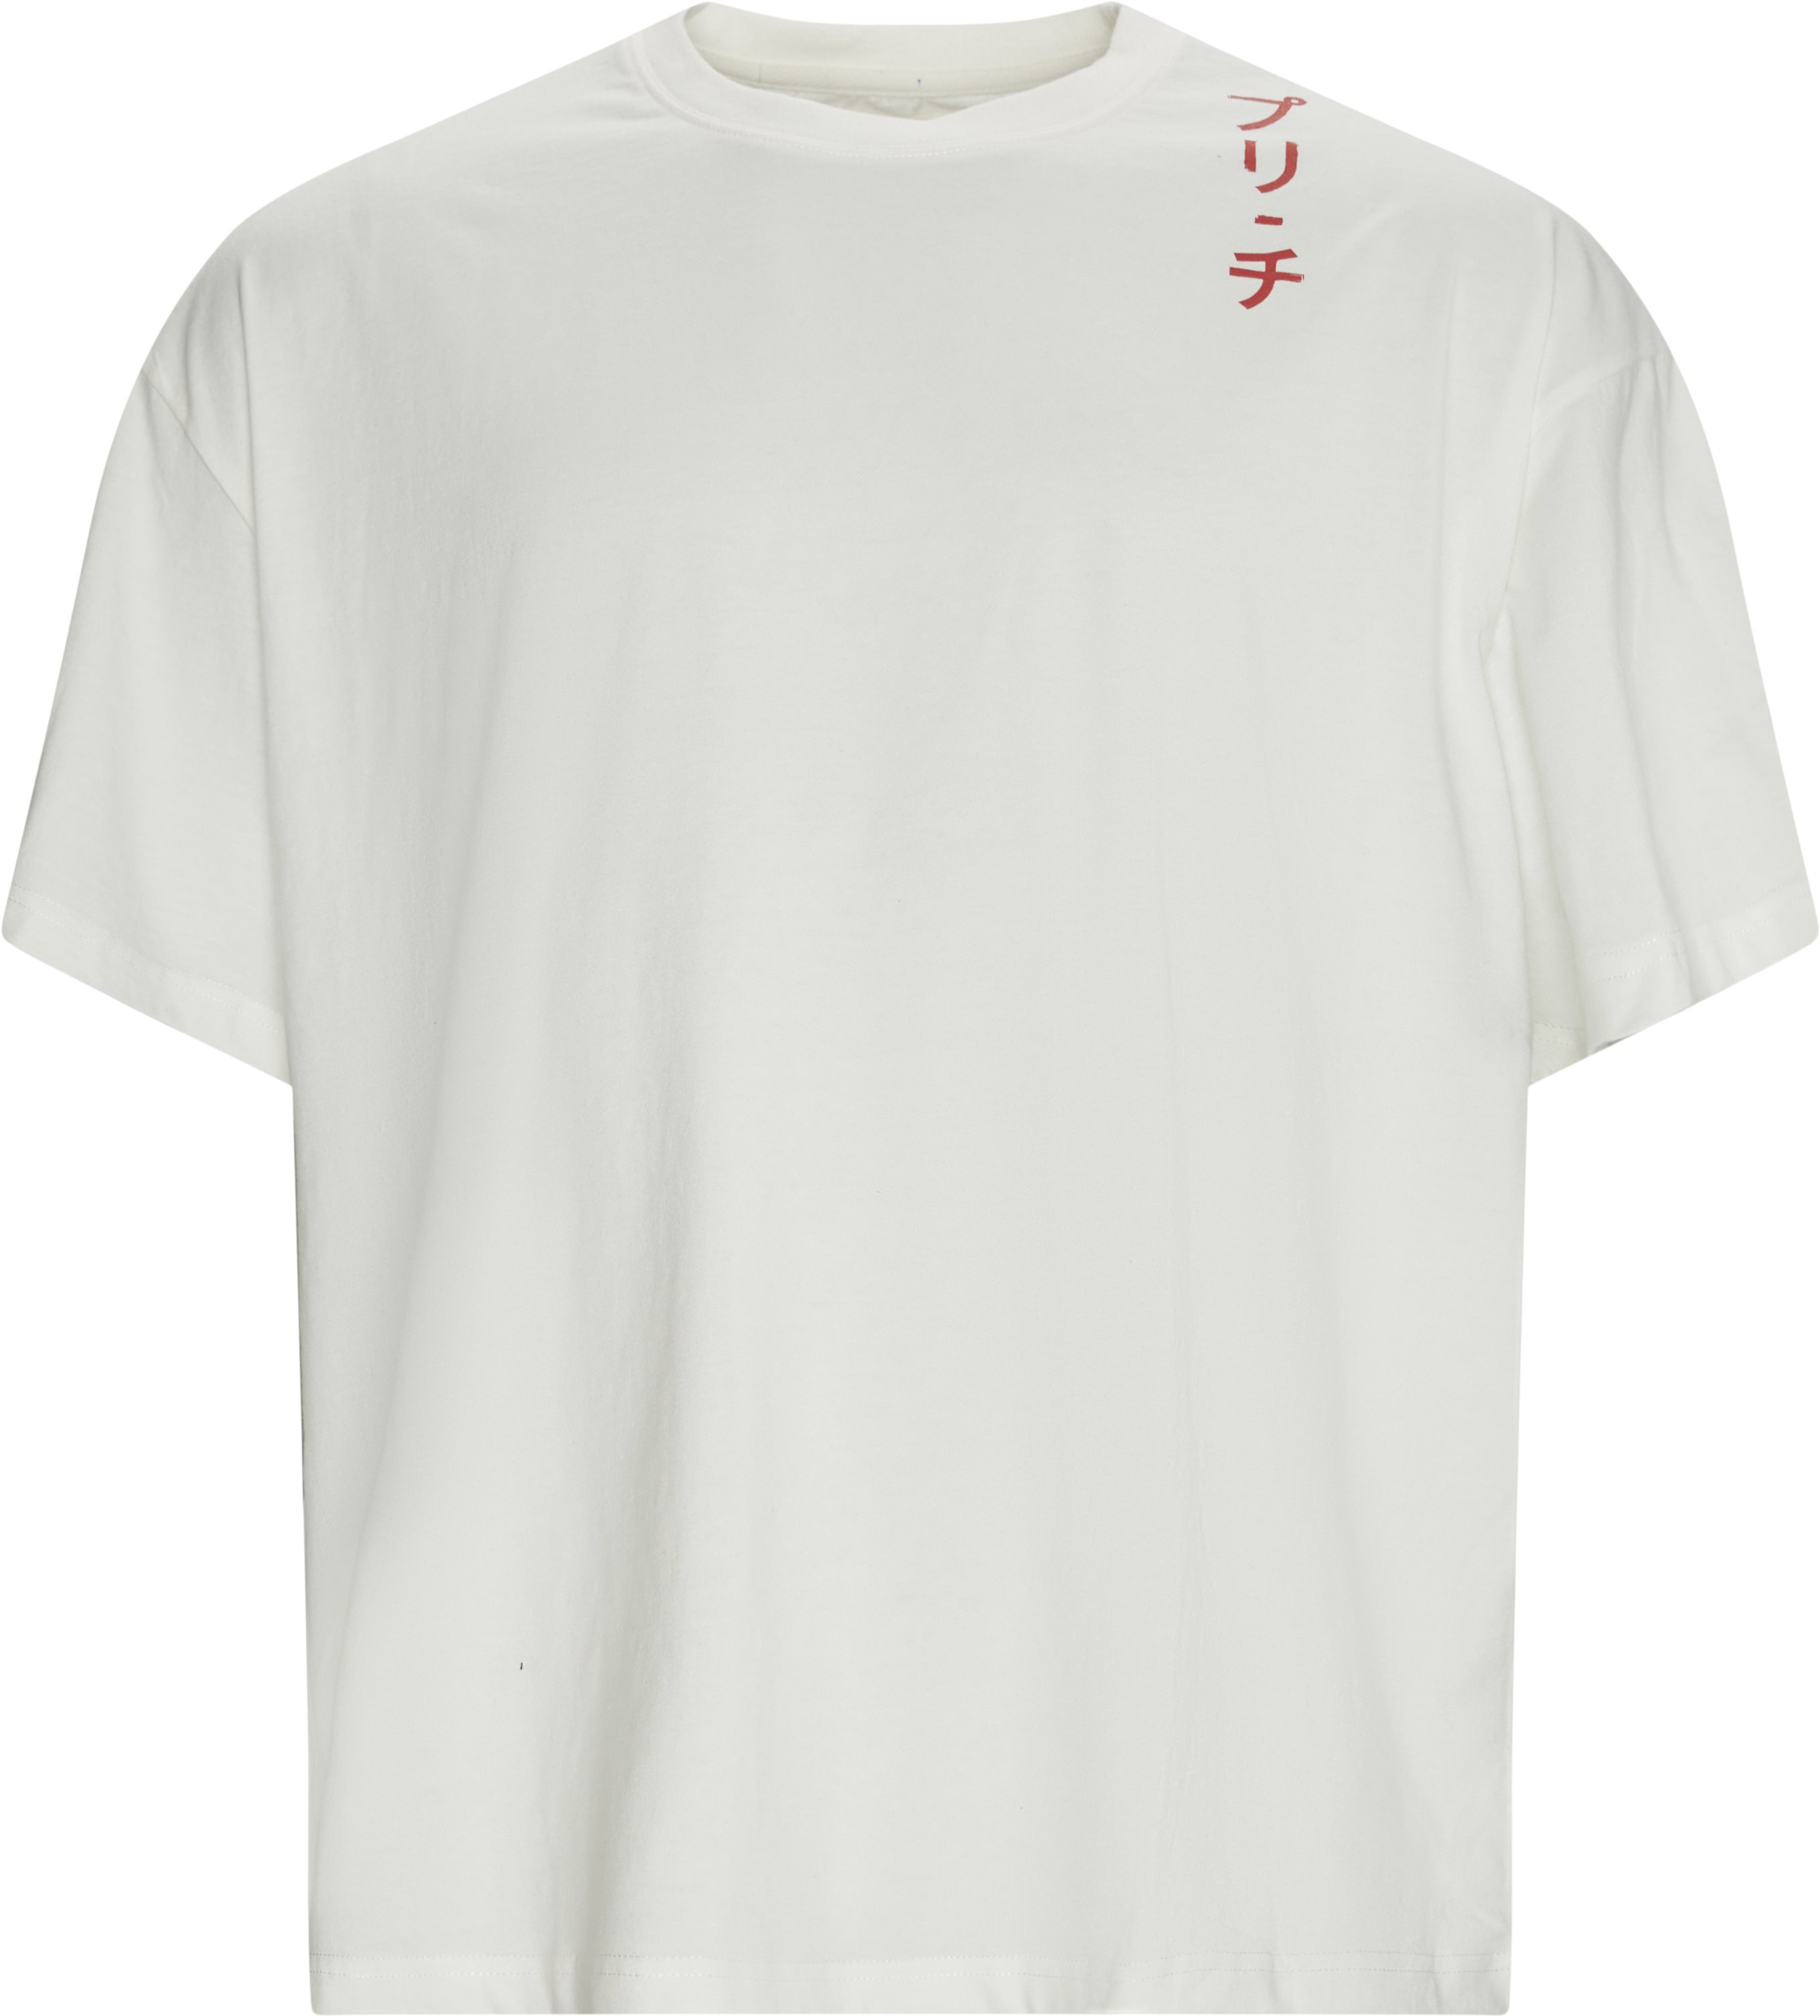 Japanese Street Tee - T-shirts - Oversize fit - Vit